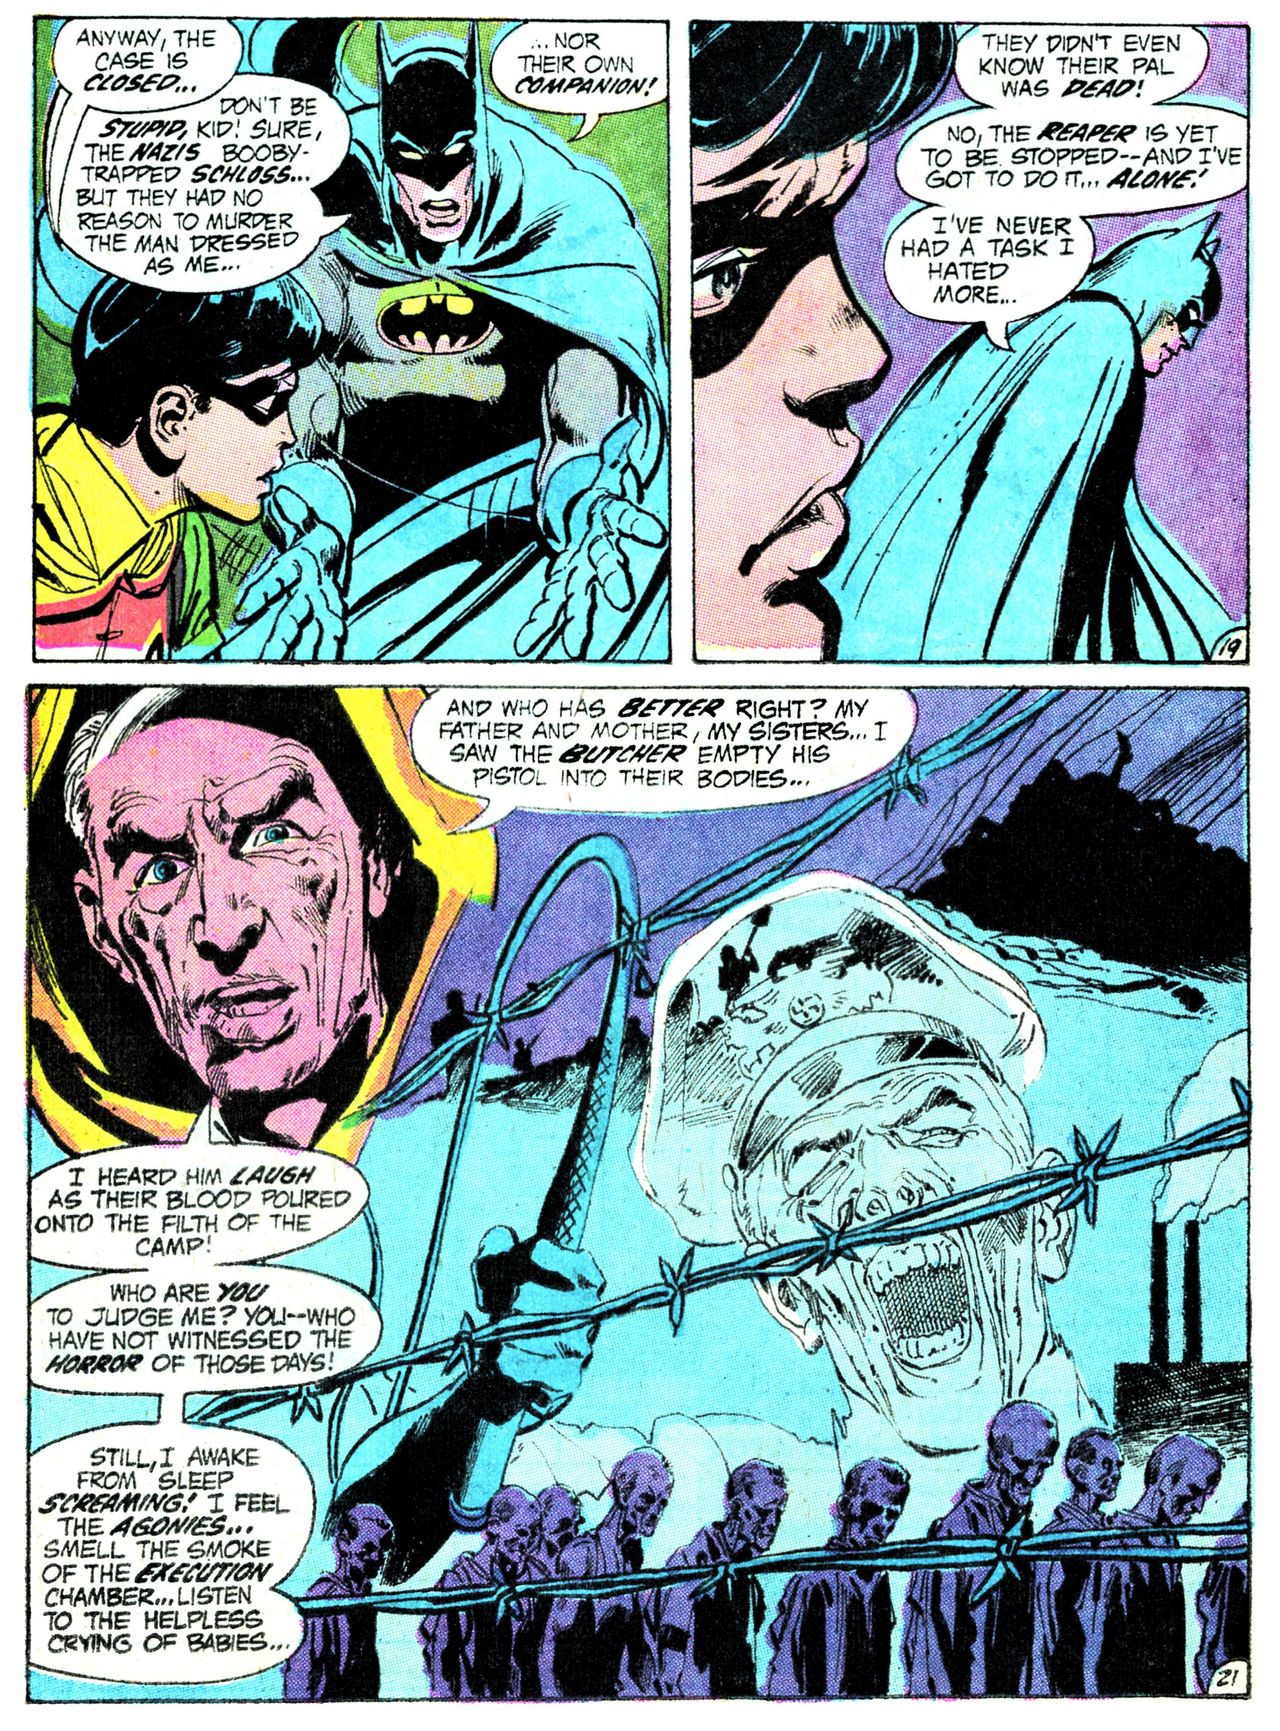 Batman #237 "Night of The Reaper," from Decembe 1971